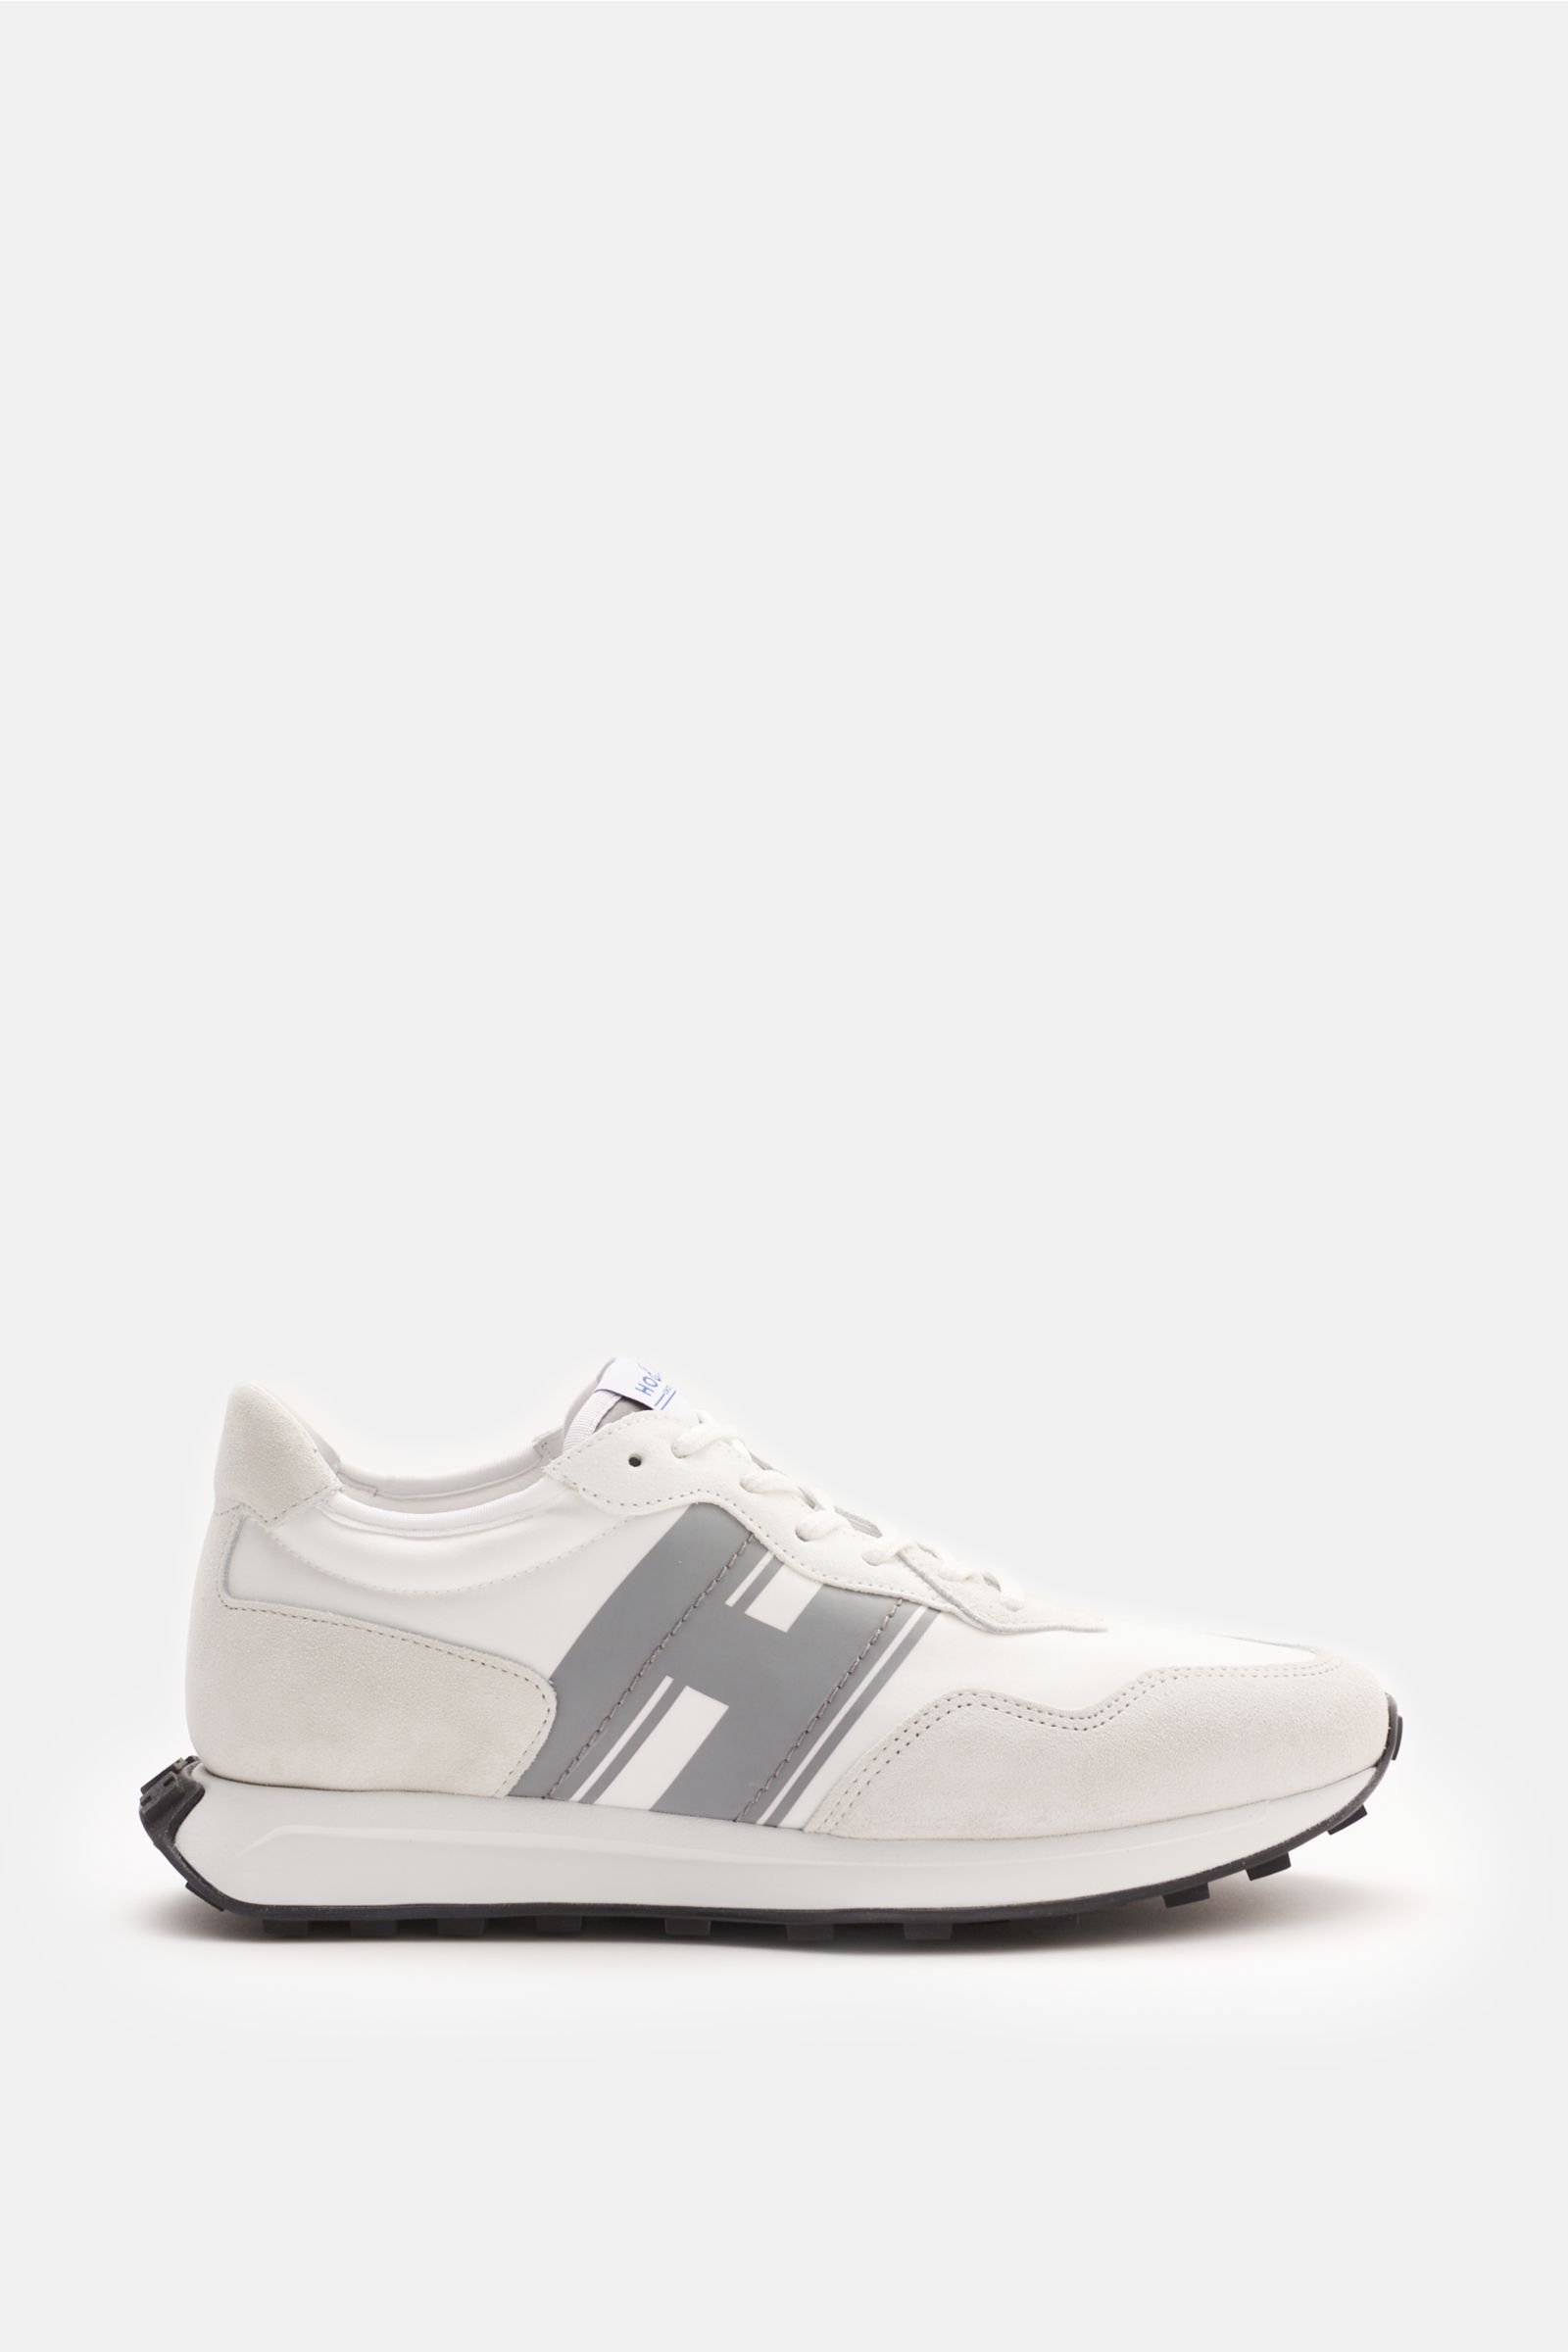 HOGAN sneakers 'H601' white/light grey BRAUN Hamburg